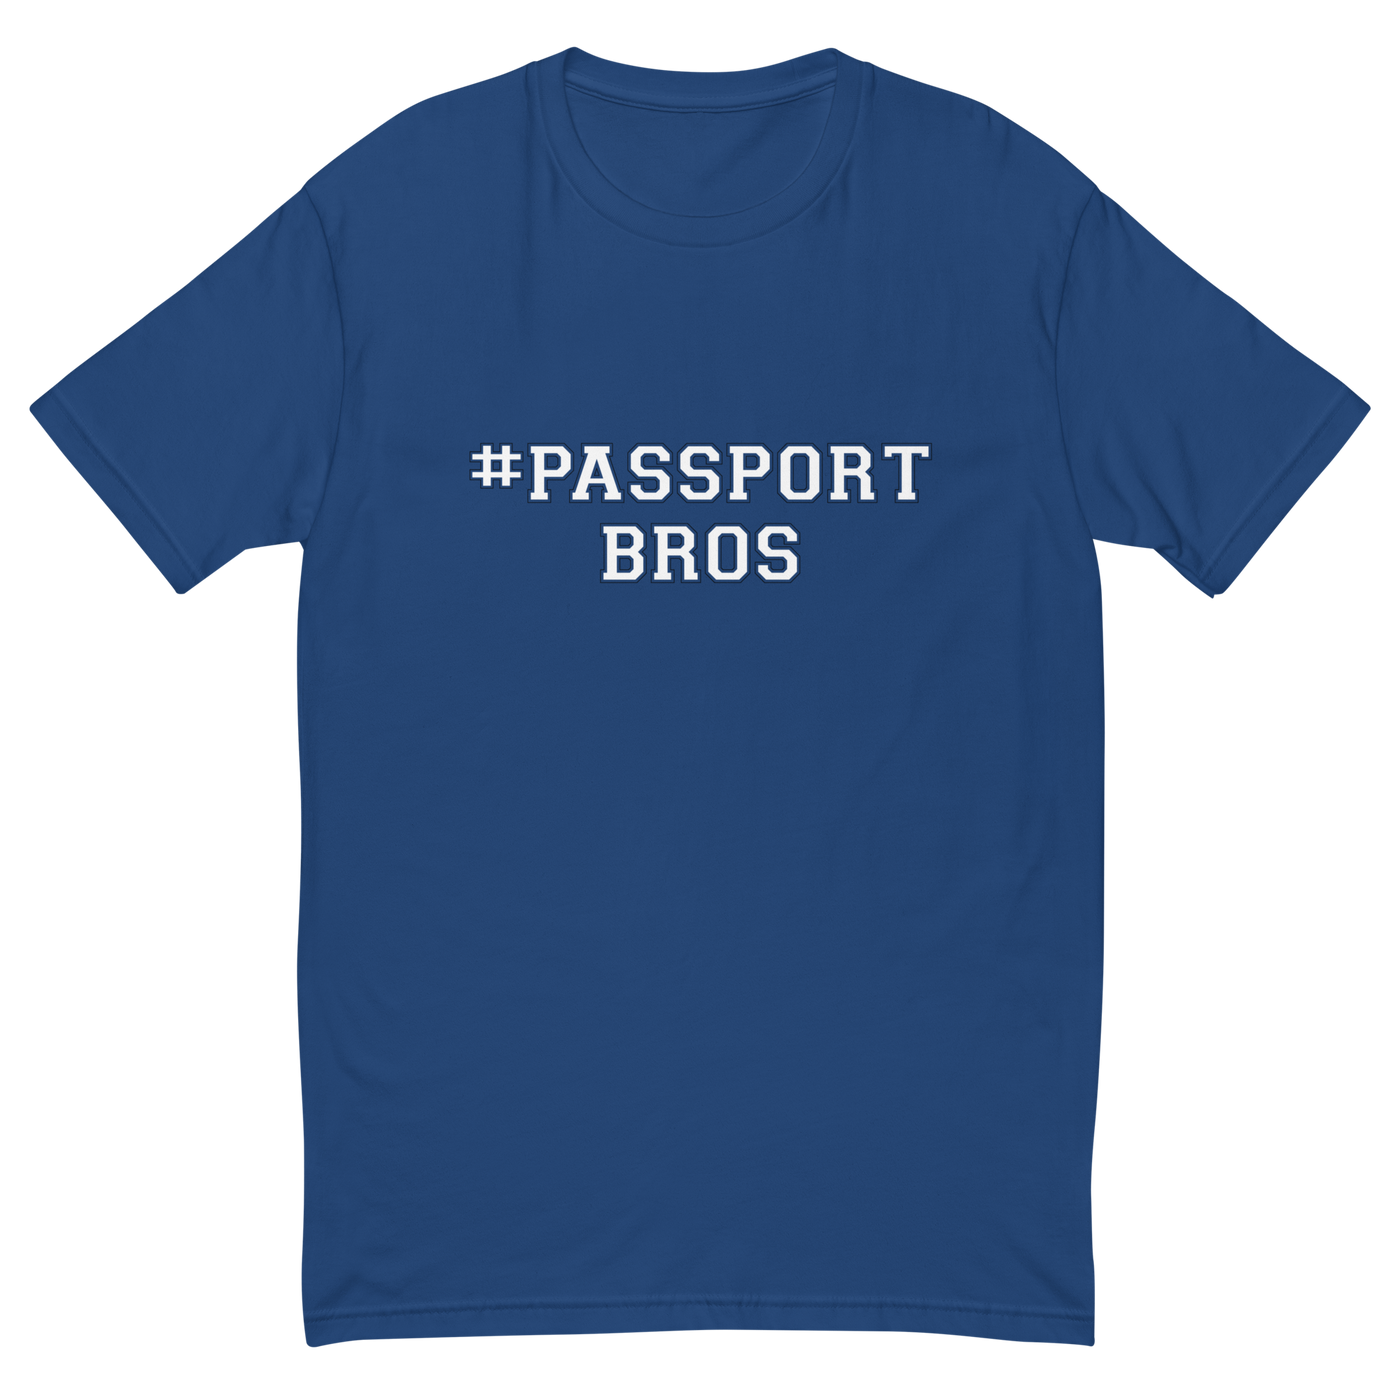 "Passport Bros" T-Shirt